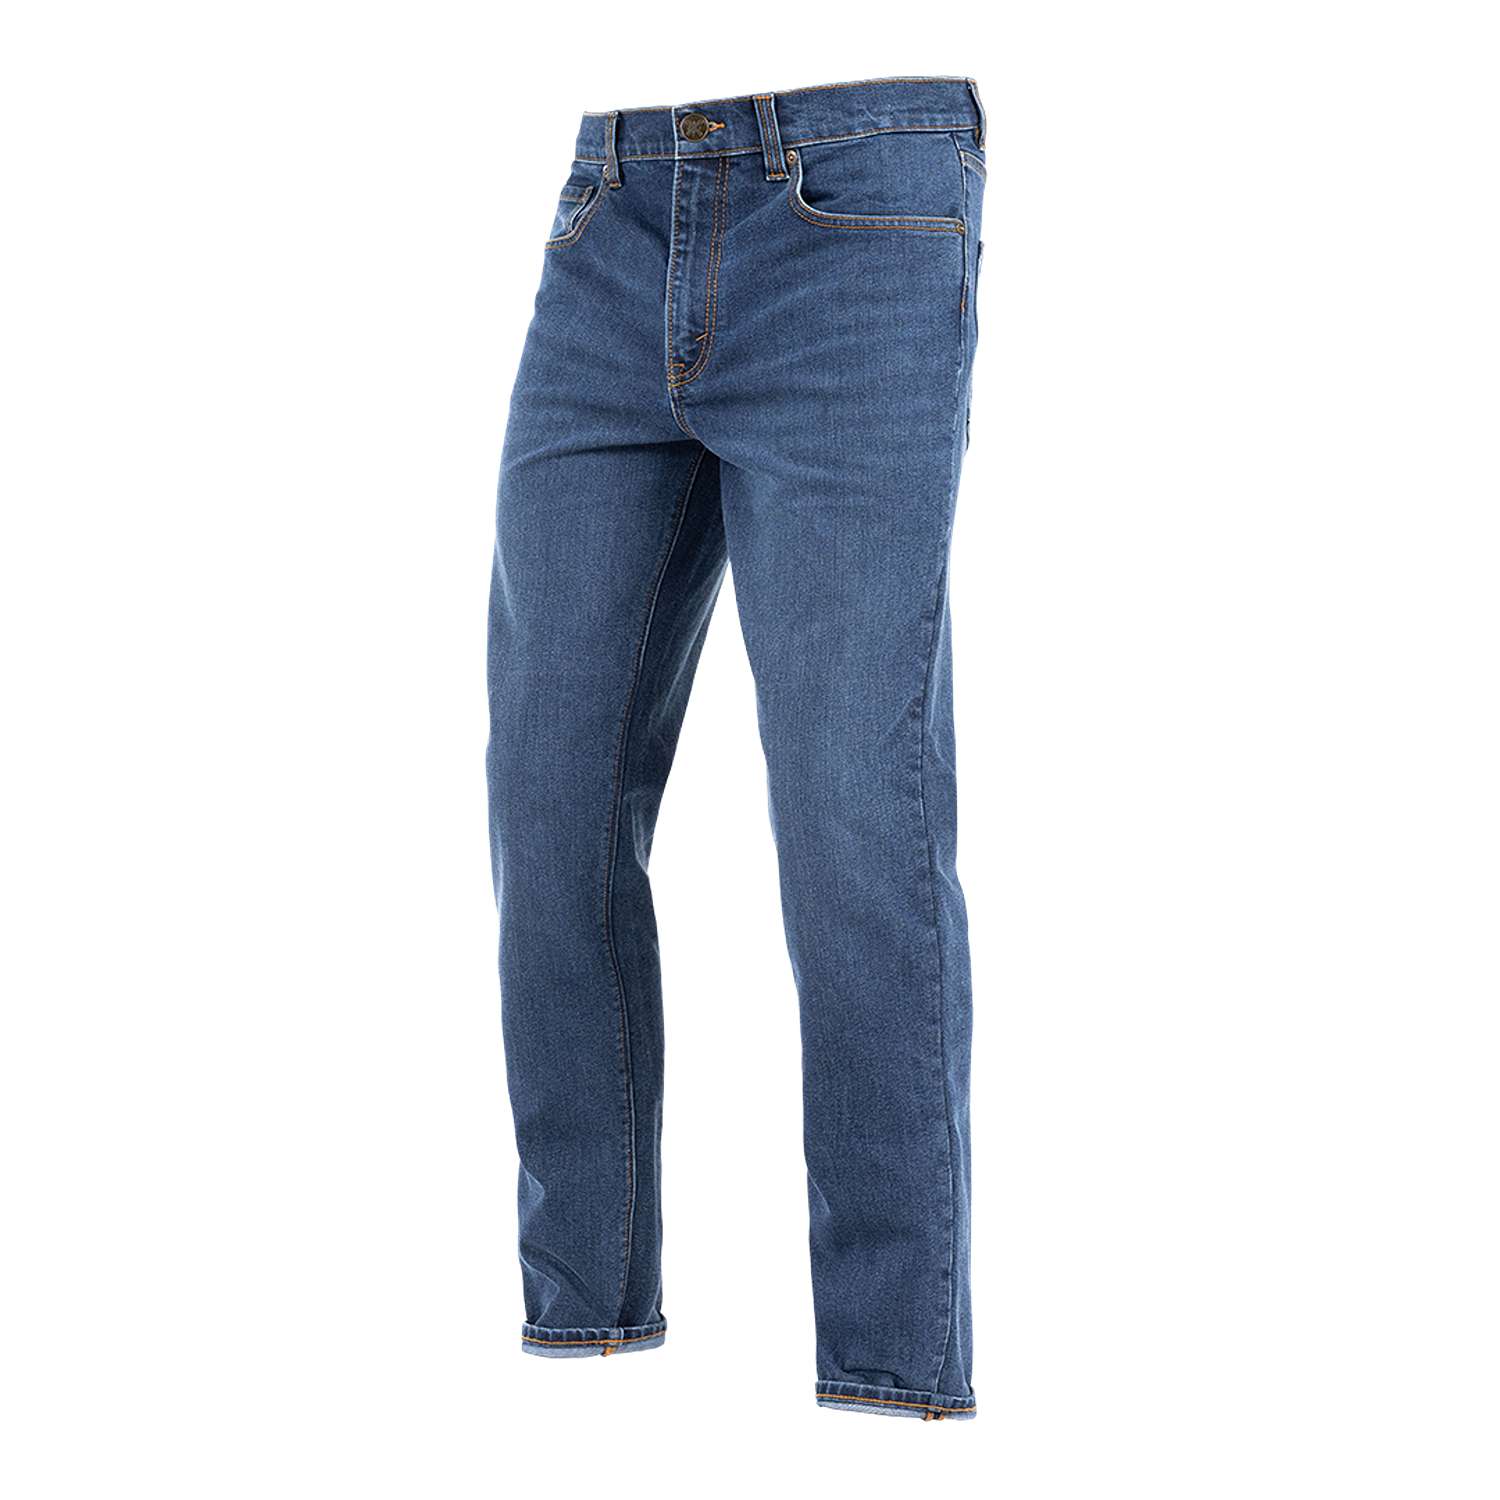 Image of John Doe Classic Tapered Jeans Indigo Size W32/L34 ID 4250553247032